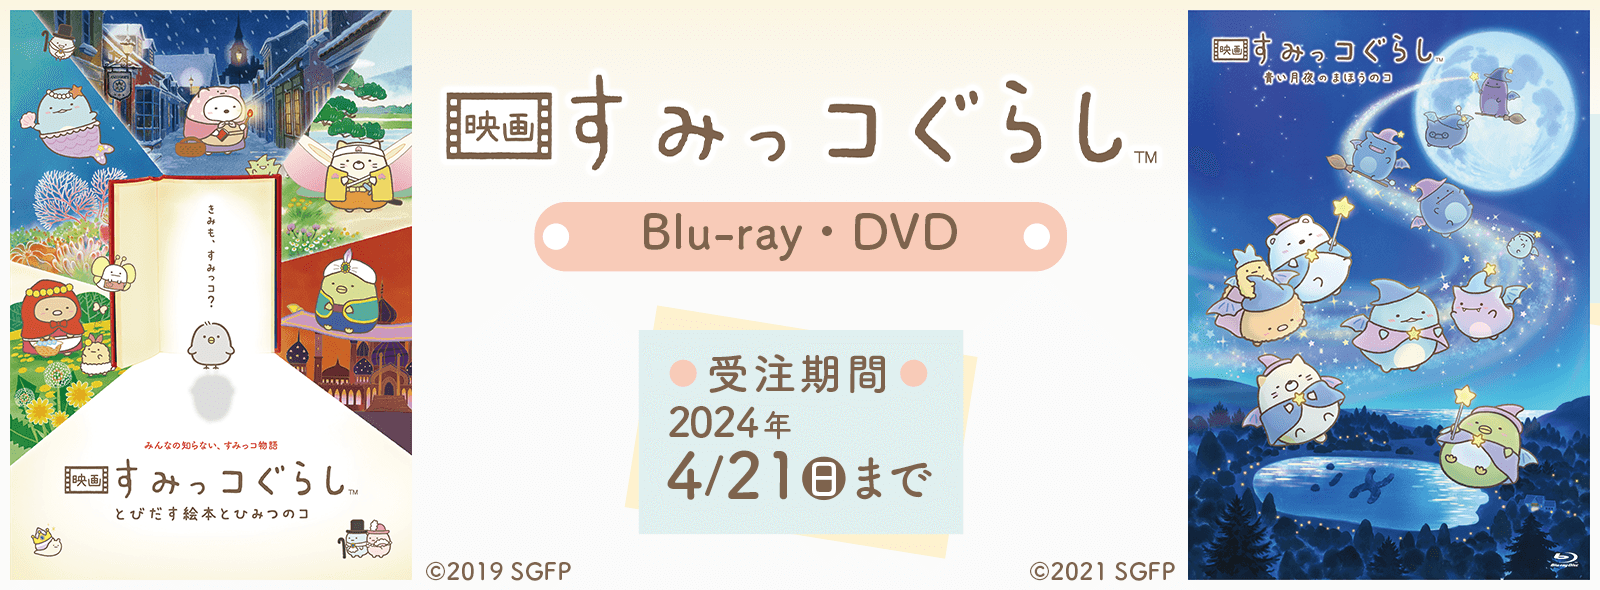 4/22ij폜݂R炵f Blu-rayEDVD